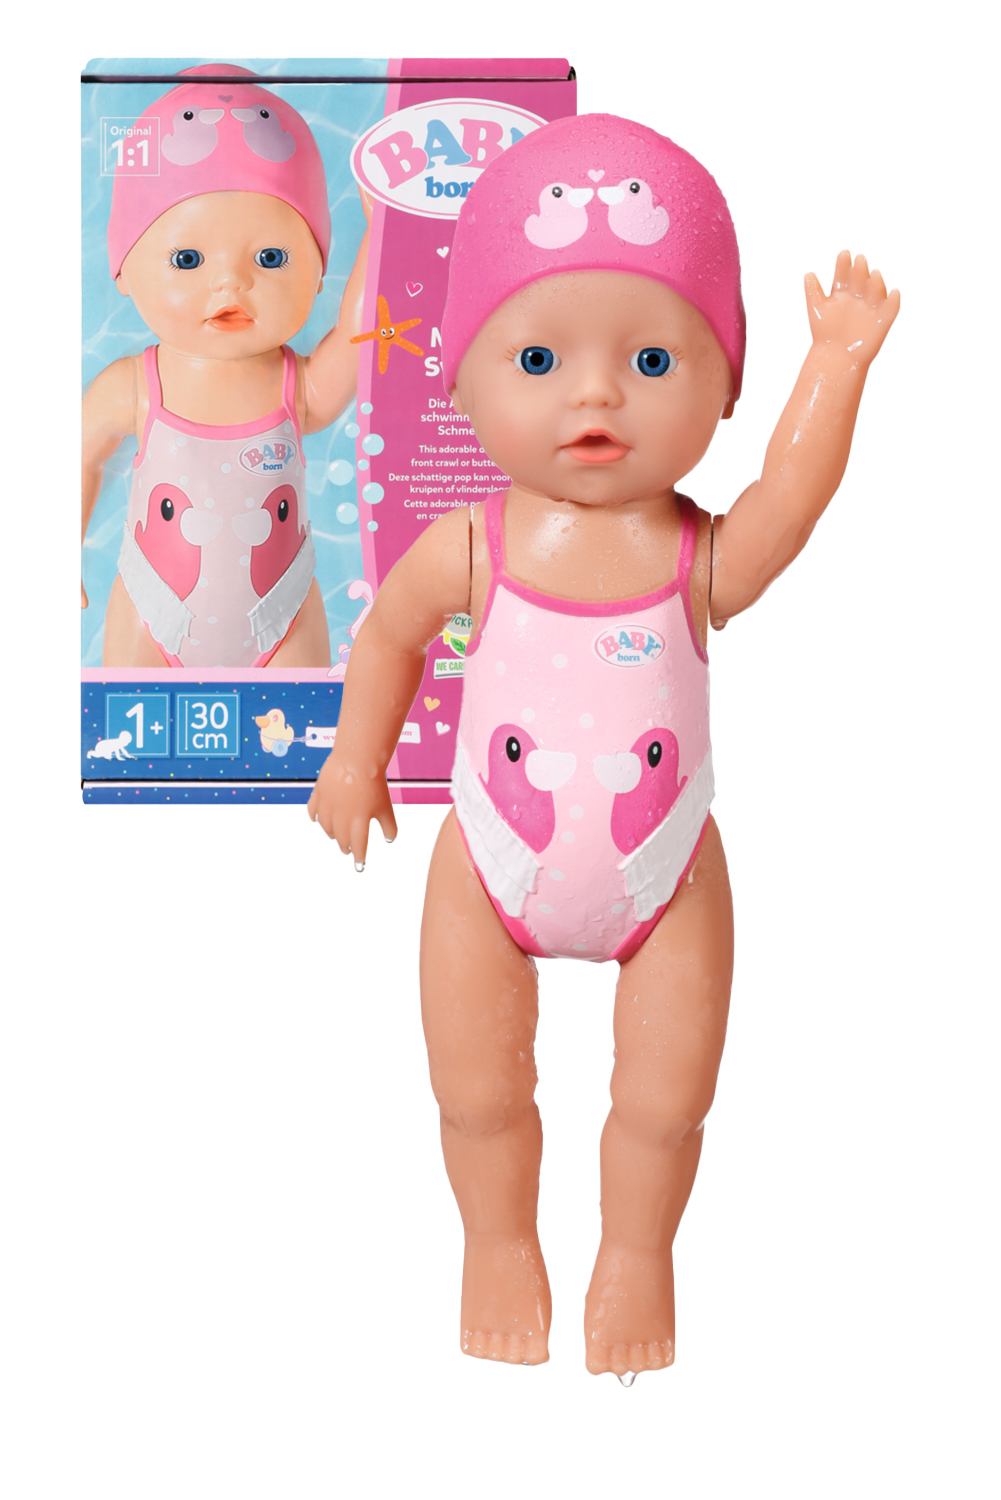 baby born nadadora 30 cm (zapf - 831915)